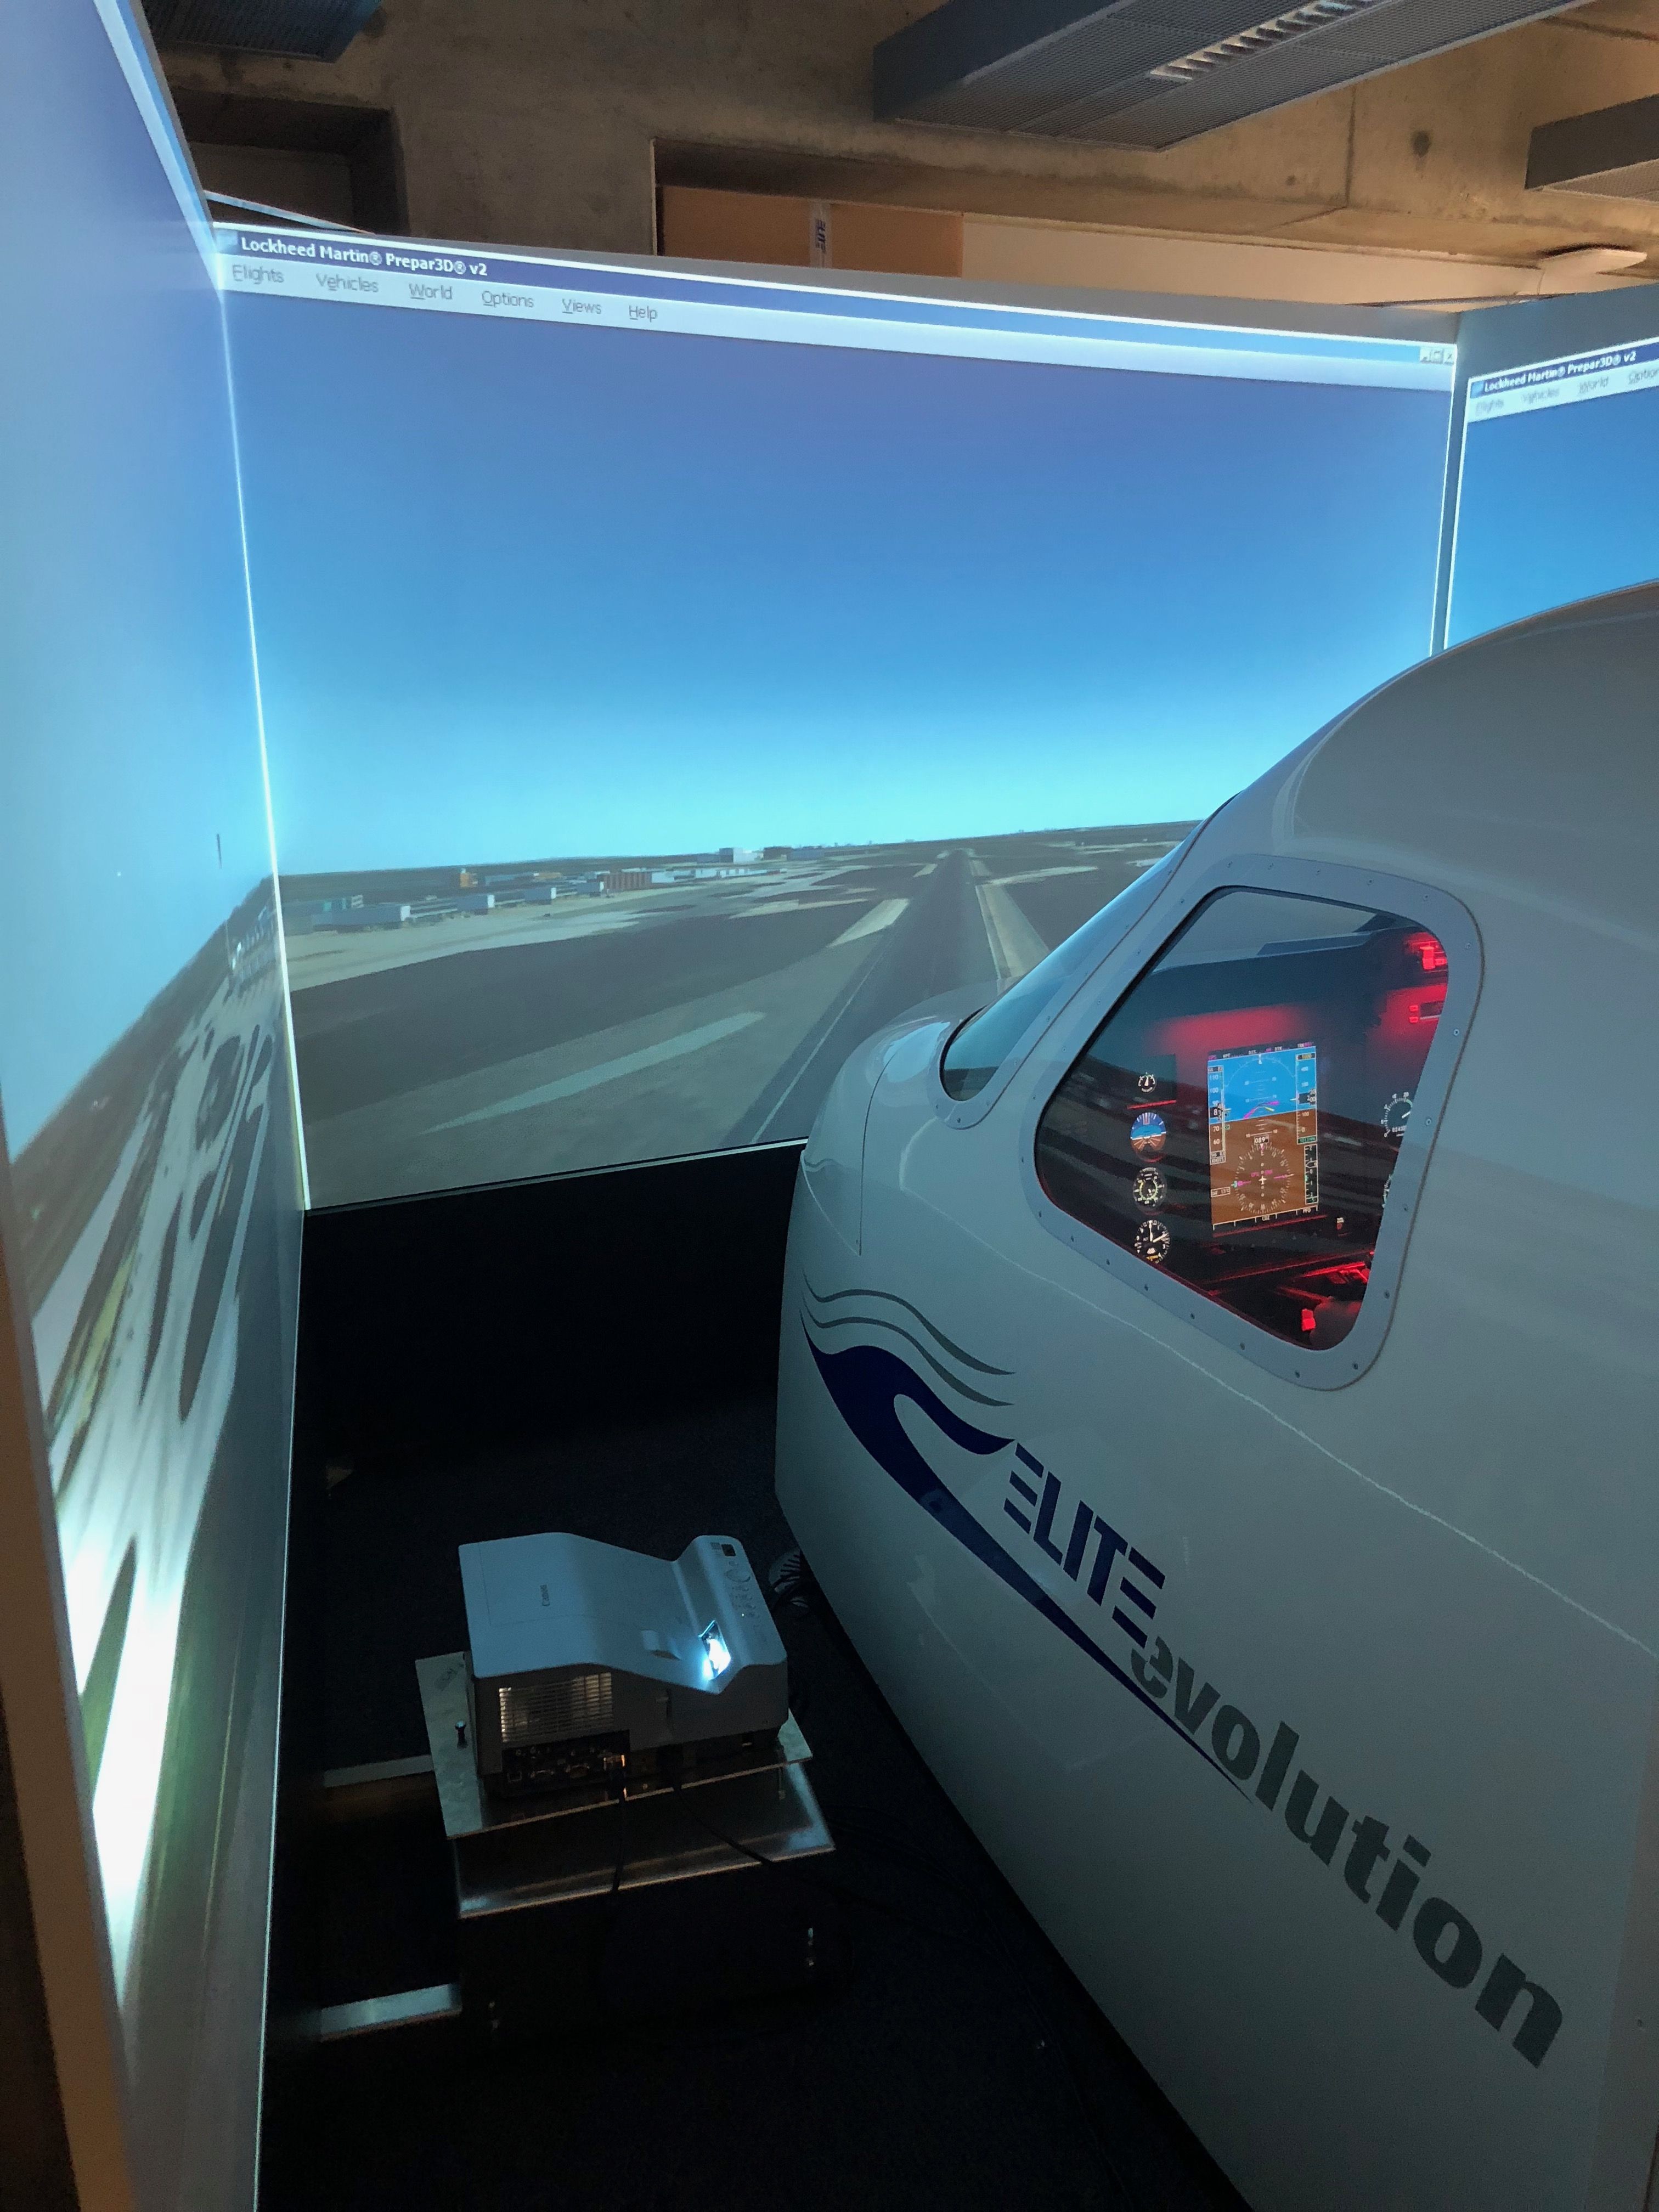 outside shot of a flight simulator